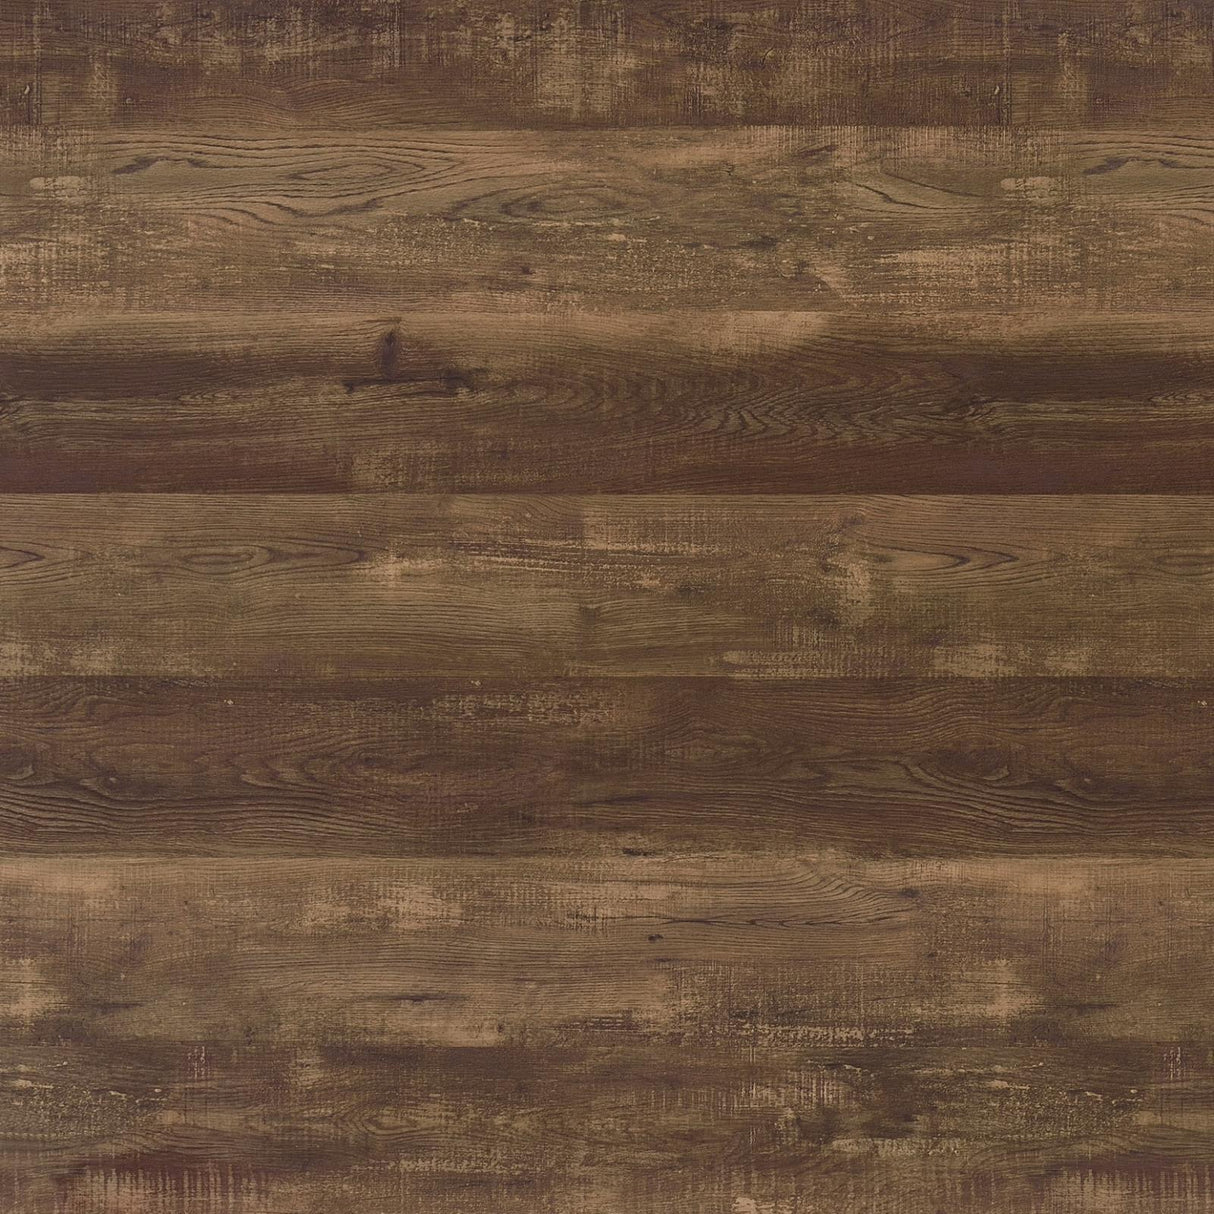 Arlington Bar Cabinet with Sliding Door Rustic Oak - 182852 - Luna Furniture